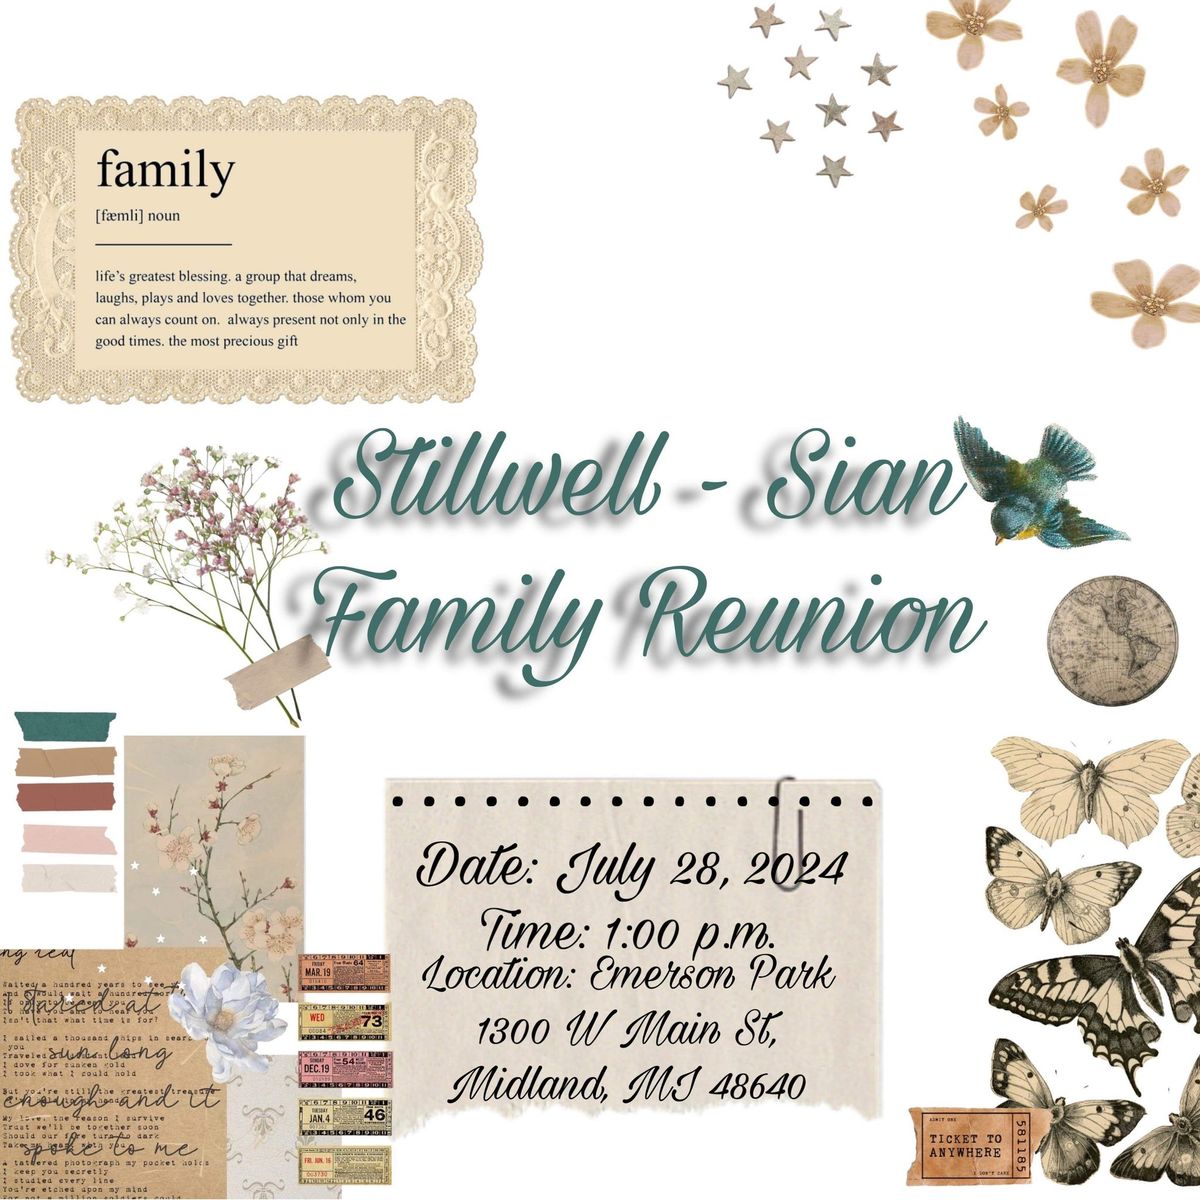 Stillwell - Sian Family Reunion